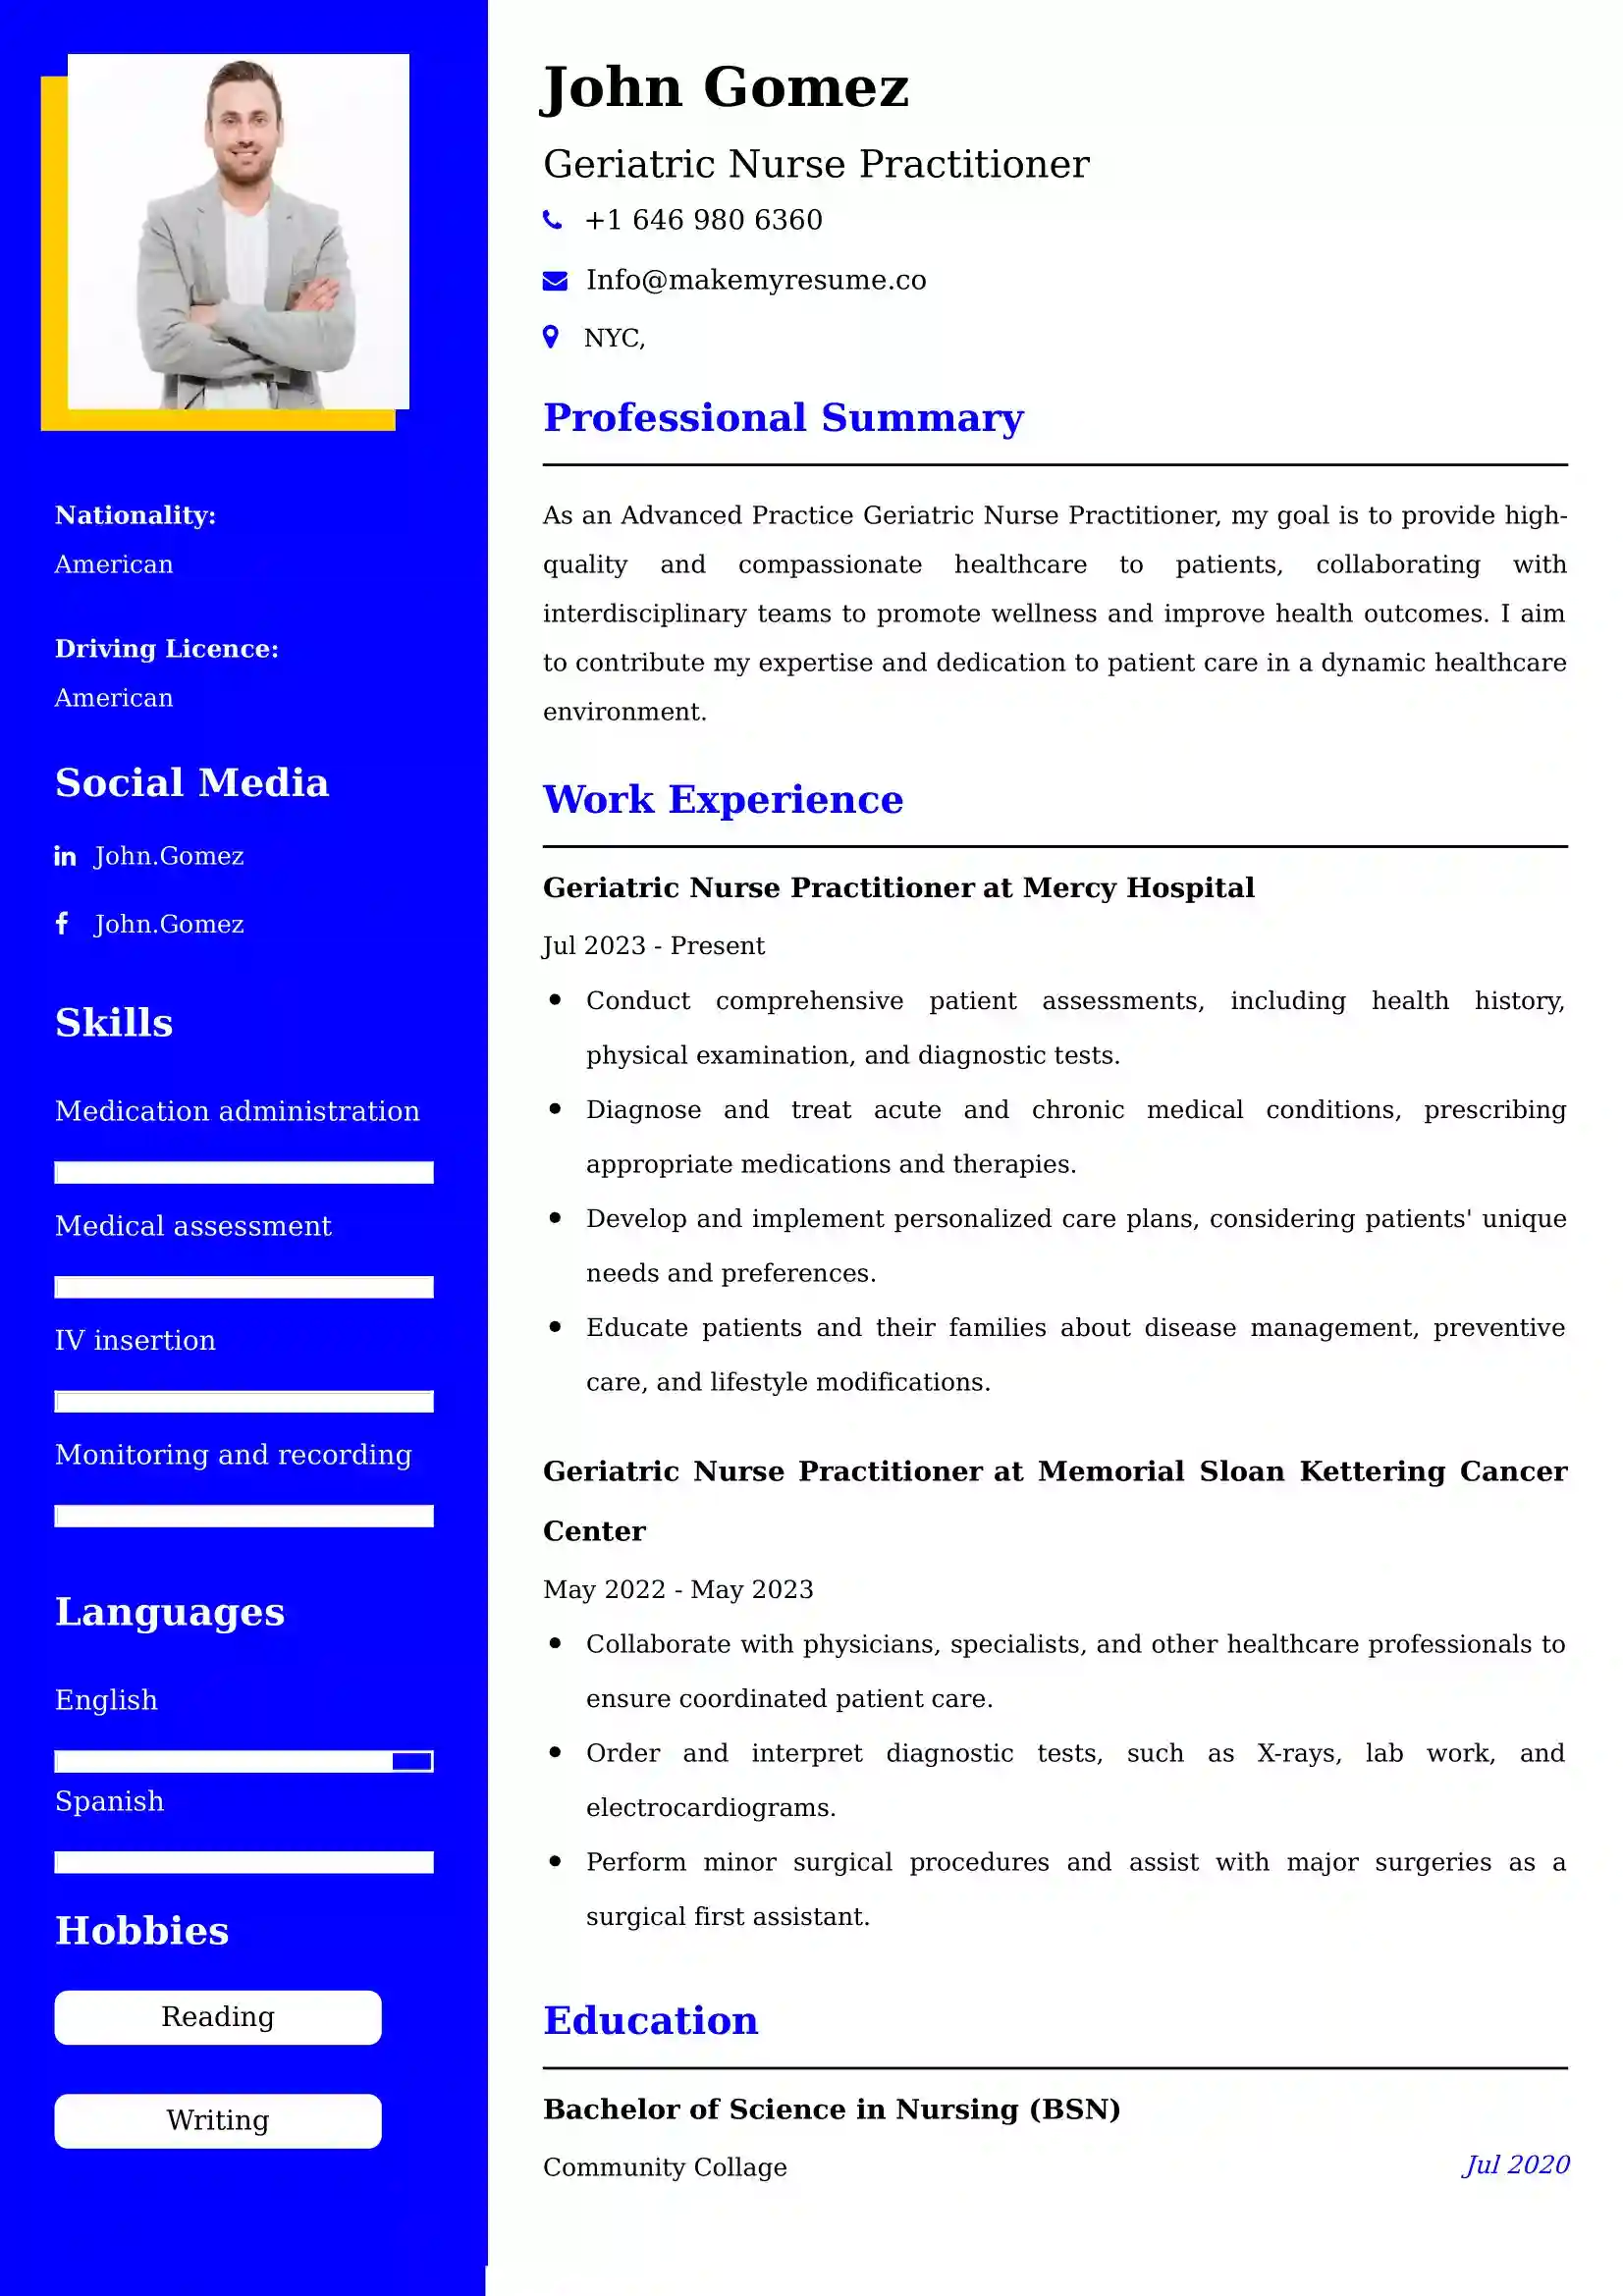 Geriatric Nurse Practitioner Resume Examples - Brazilian Format, Latest Template